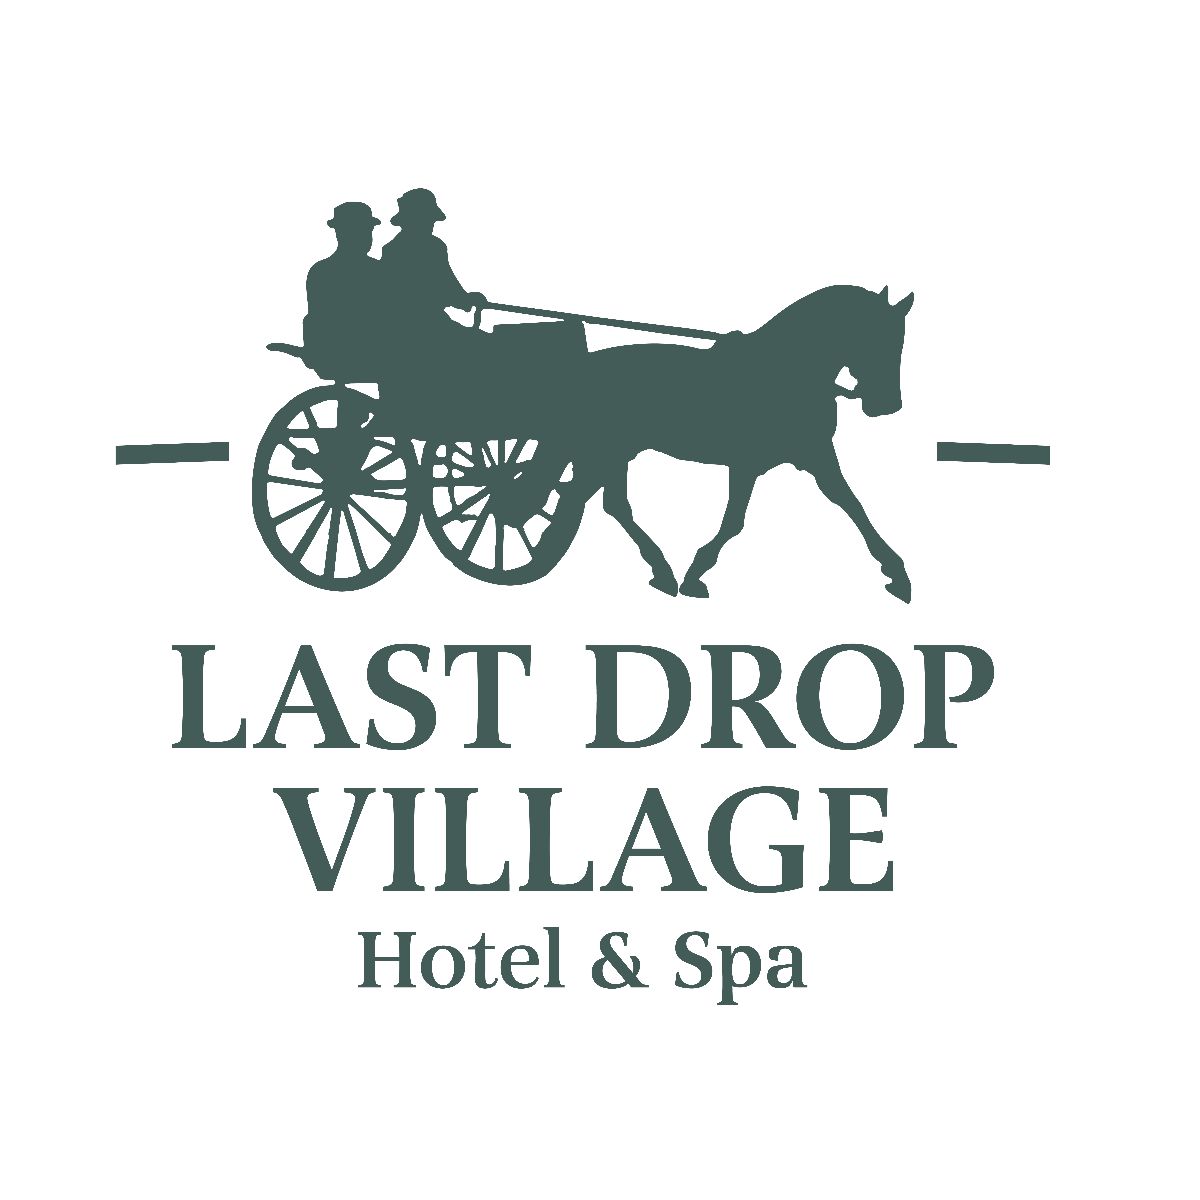 Gallery Item 22 for Last Drop Village Hotel & Spa